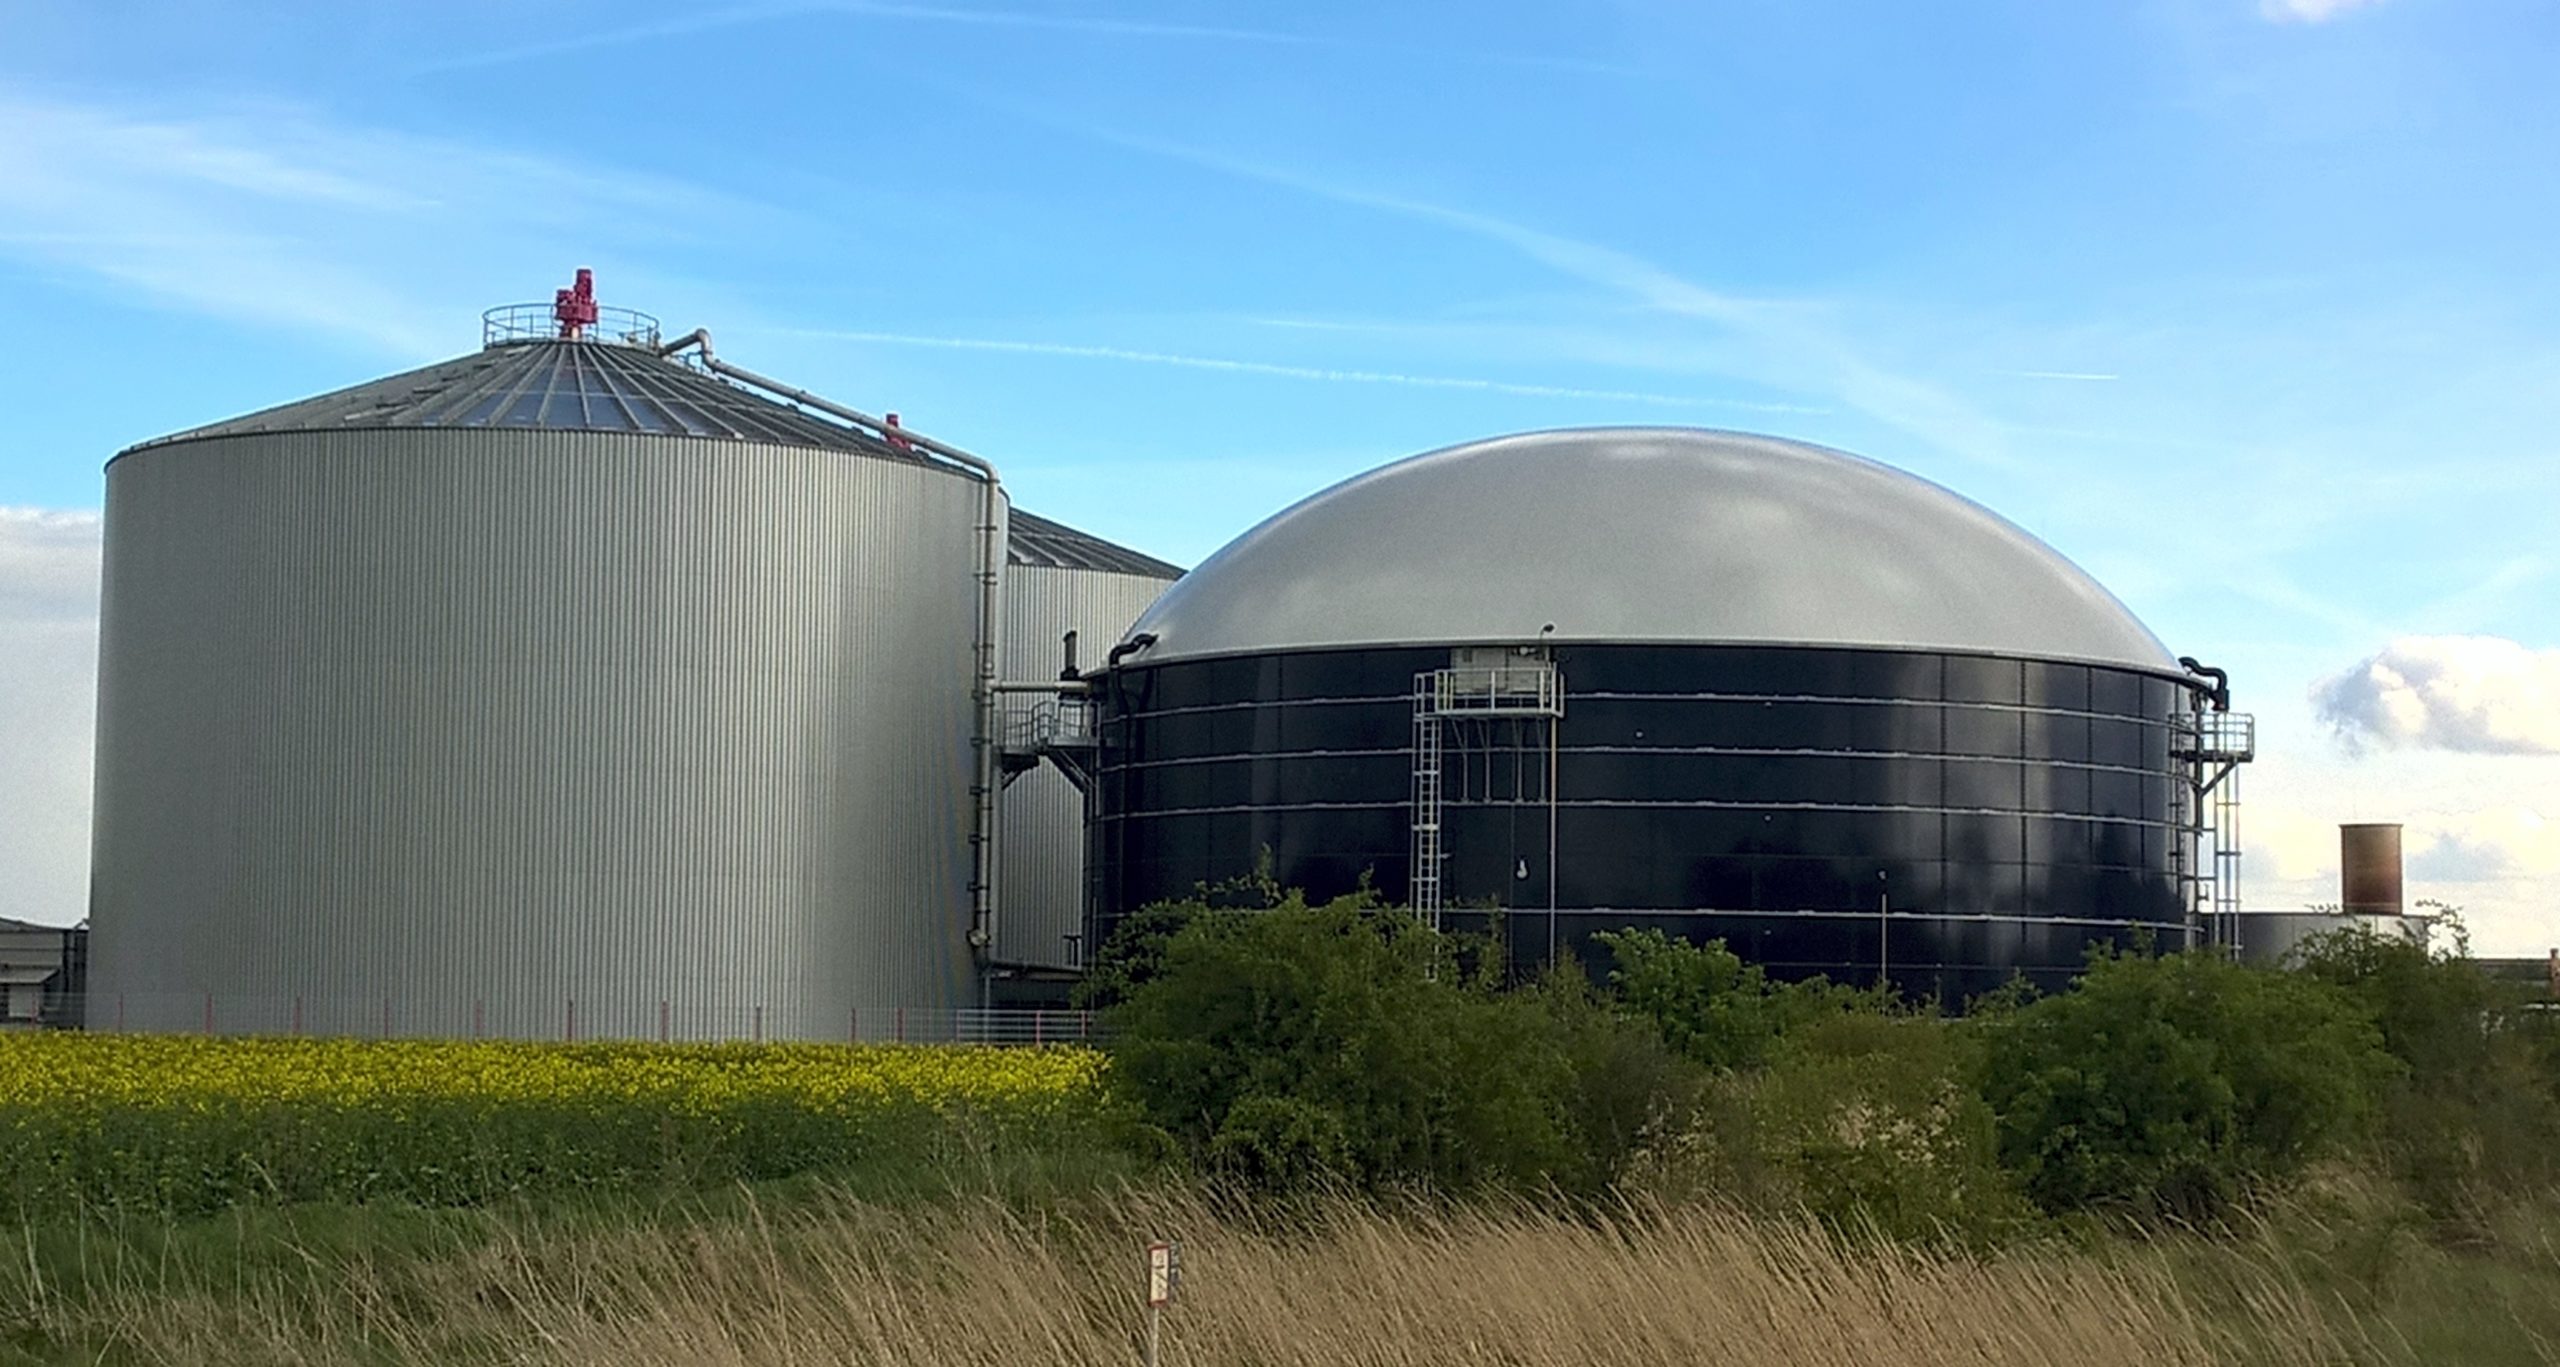 Using molecular media for biogas processes